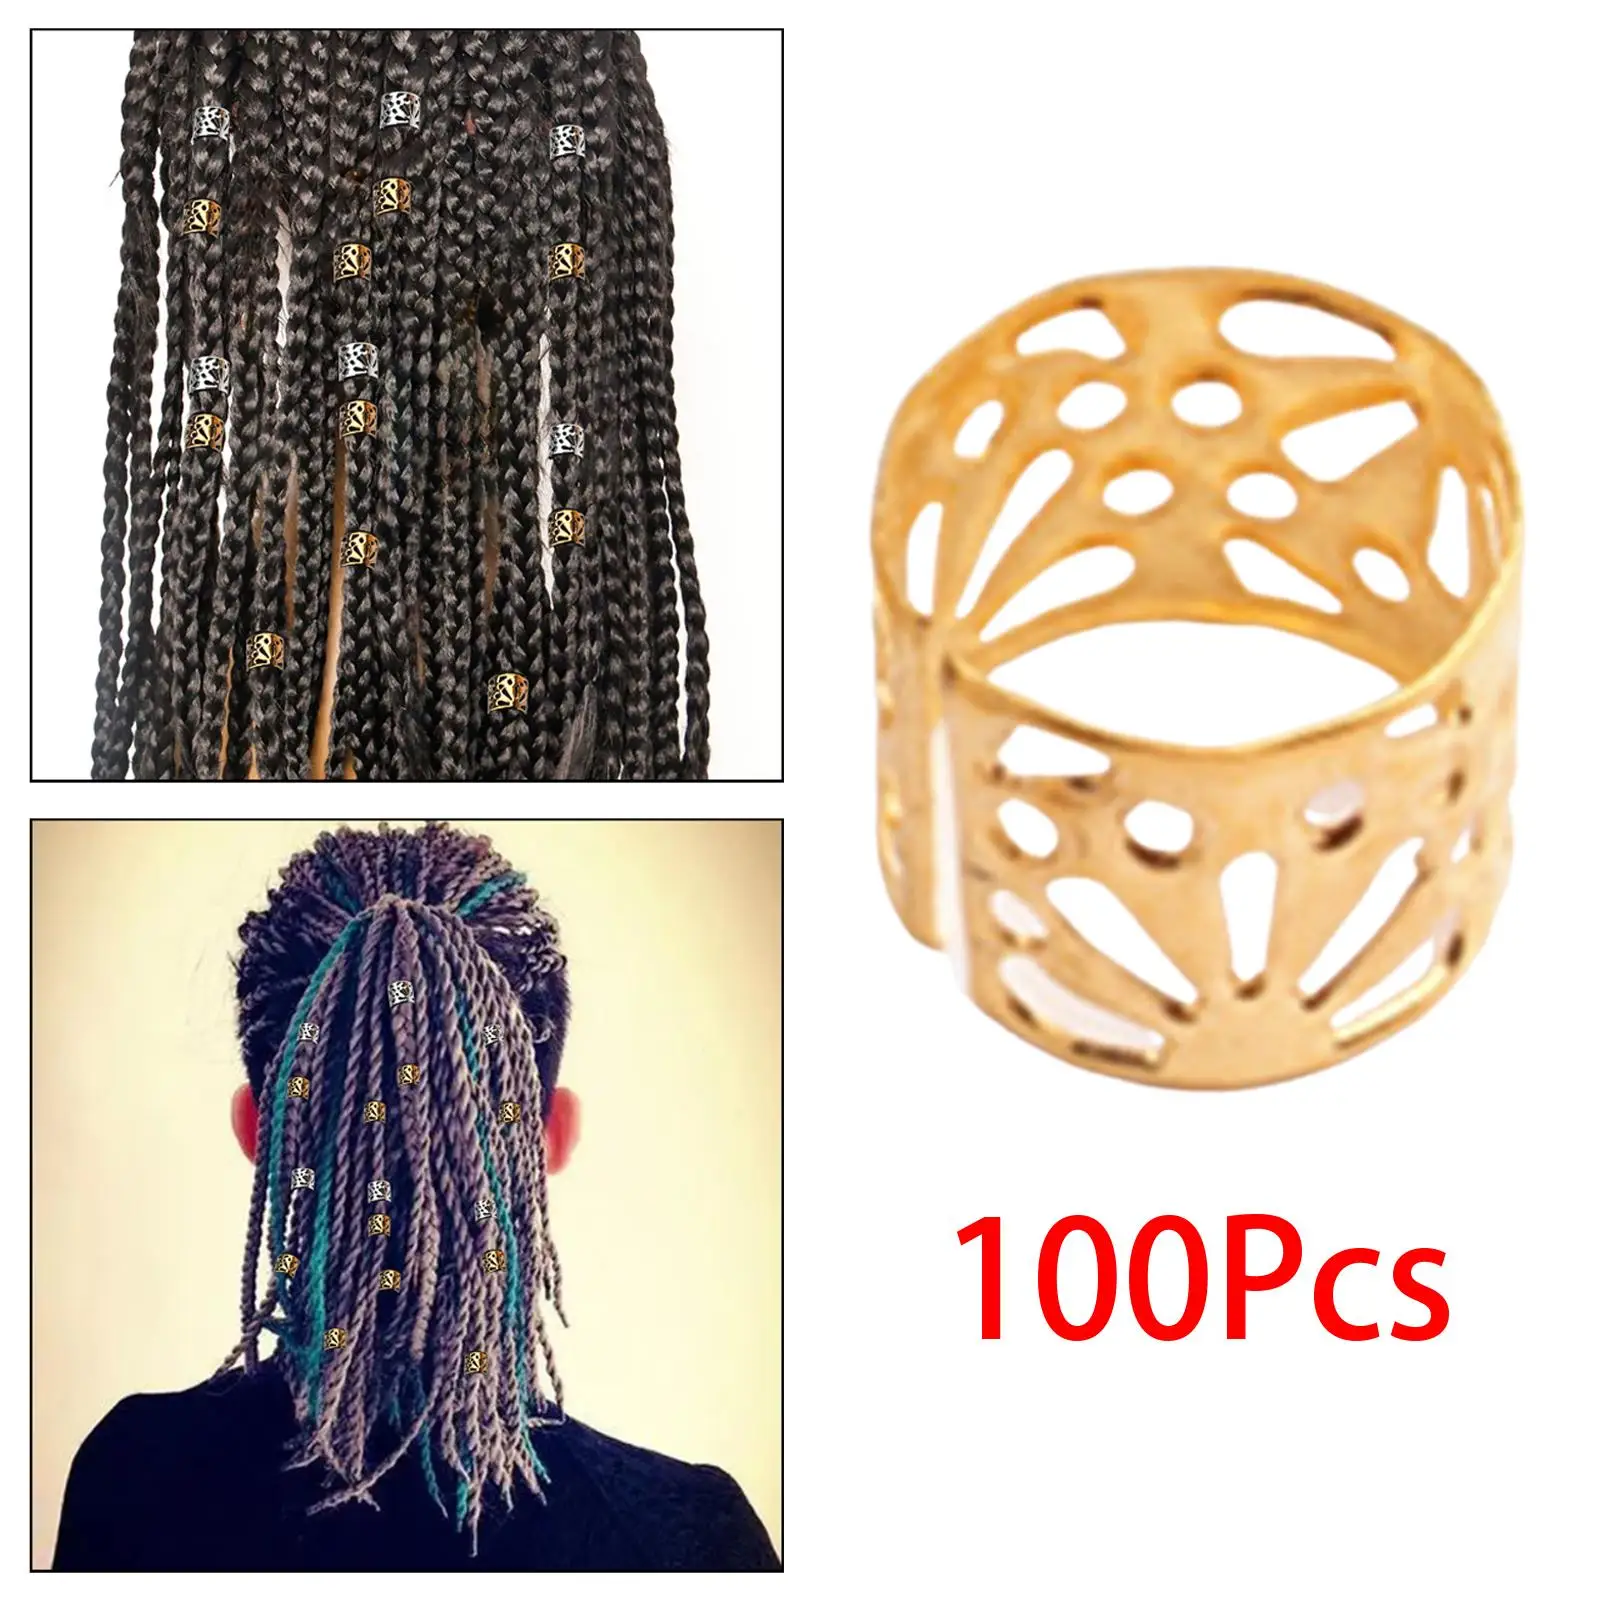 100x Dreadlocks Beads Hair Accessories, Hollow Pattern Opening Metal Clips Cuffs Rings Hair Braid Rings Clips, Beard Decoration